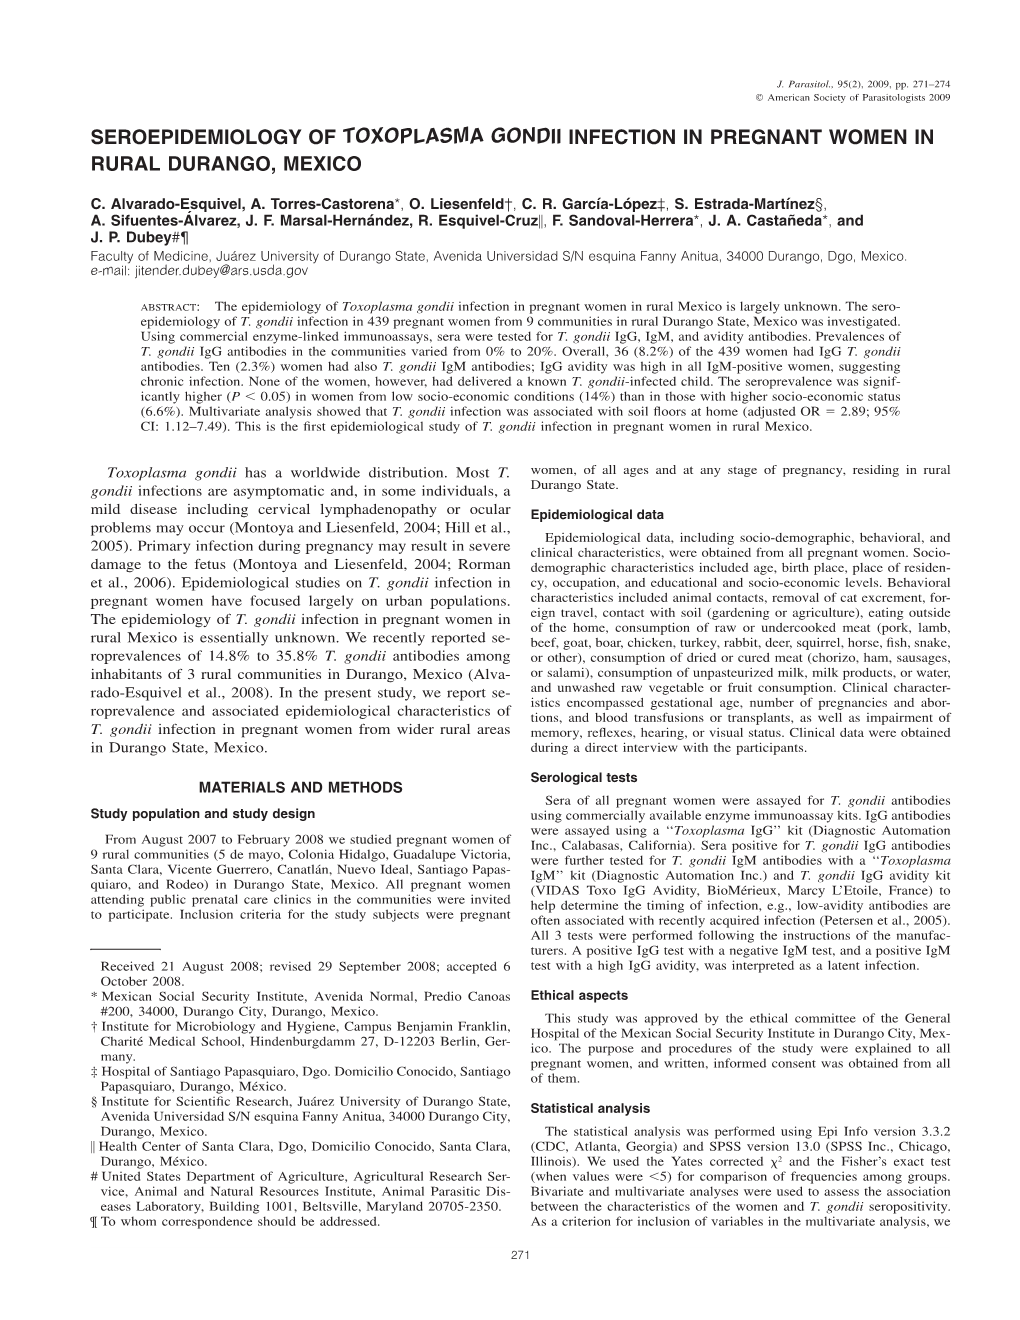 Seroepidemiology of Toxoplasma Gondii Infection in Pregnant Women in Rural Durango, Mexico